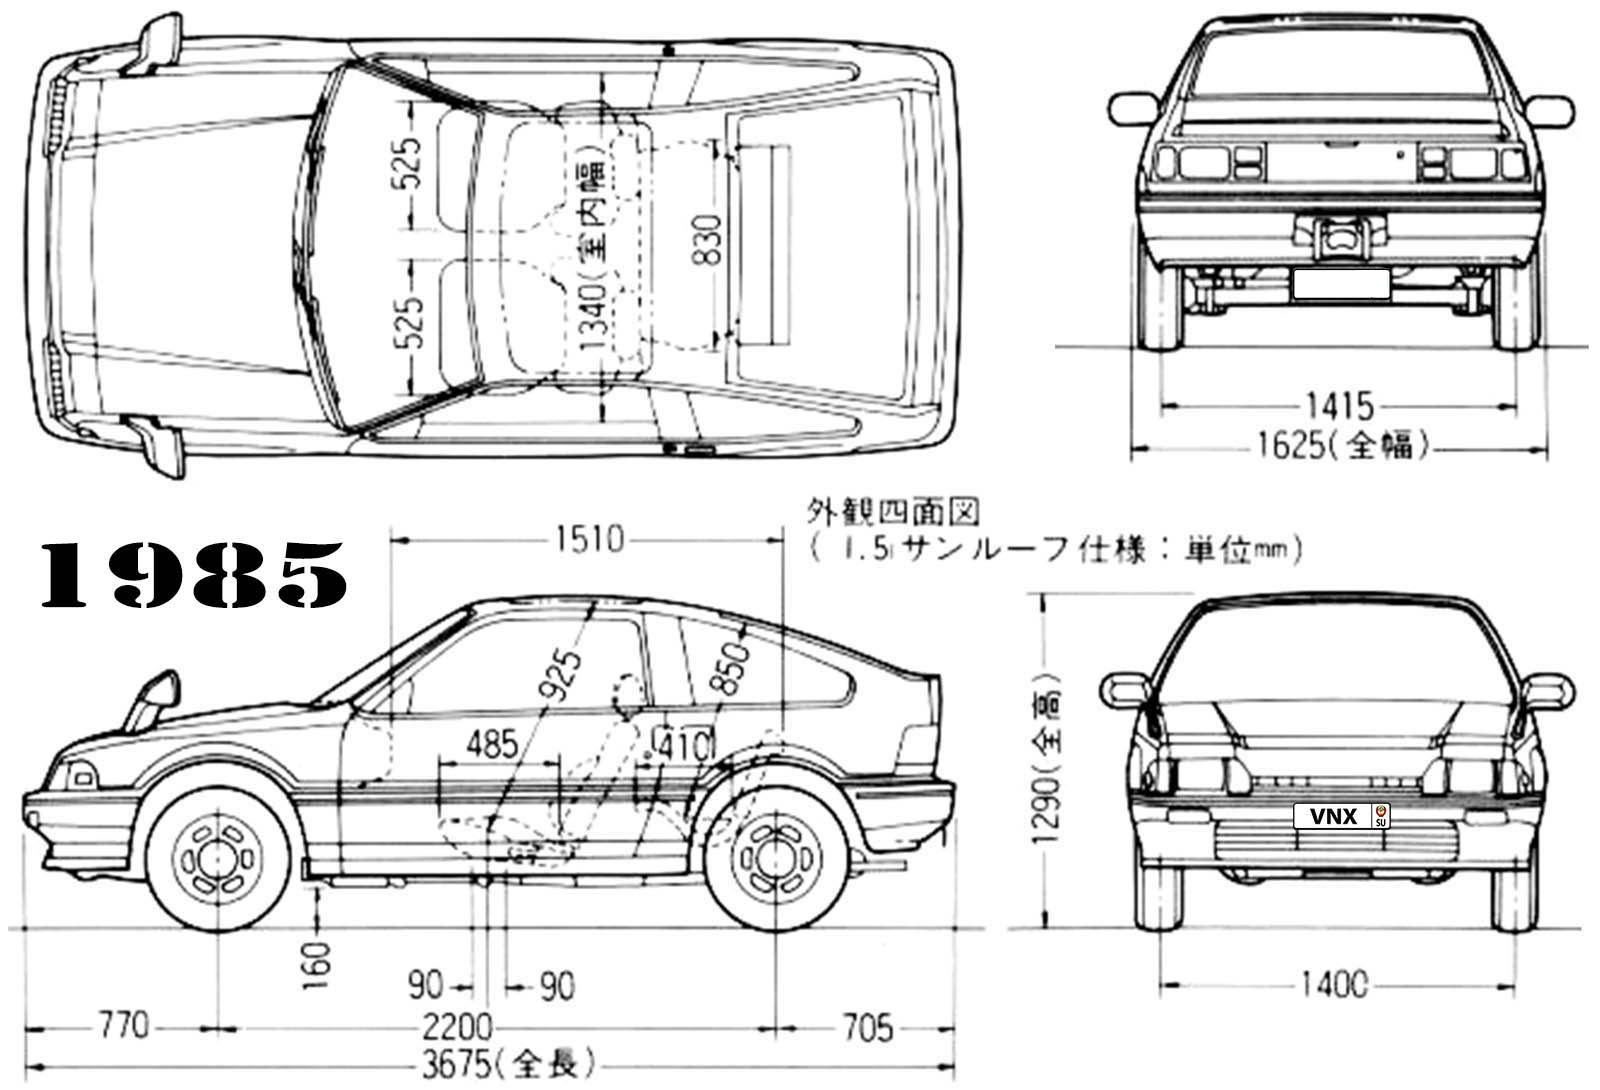 Габаритные размеры Хонда КРиКс 1983-1987 (dimensions Honda CRX mk1)